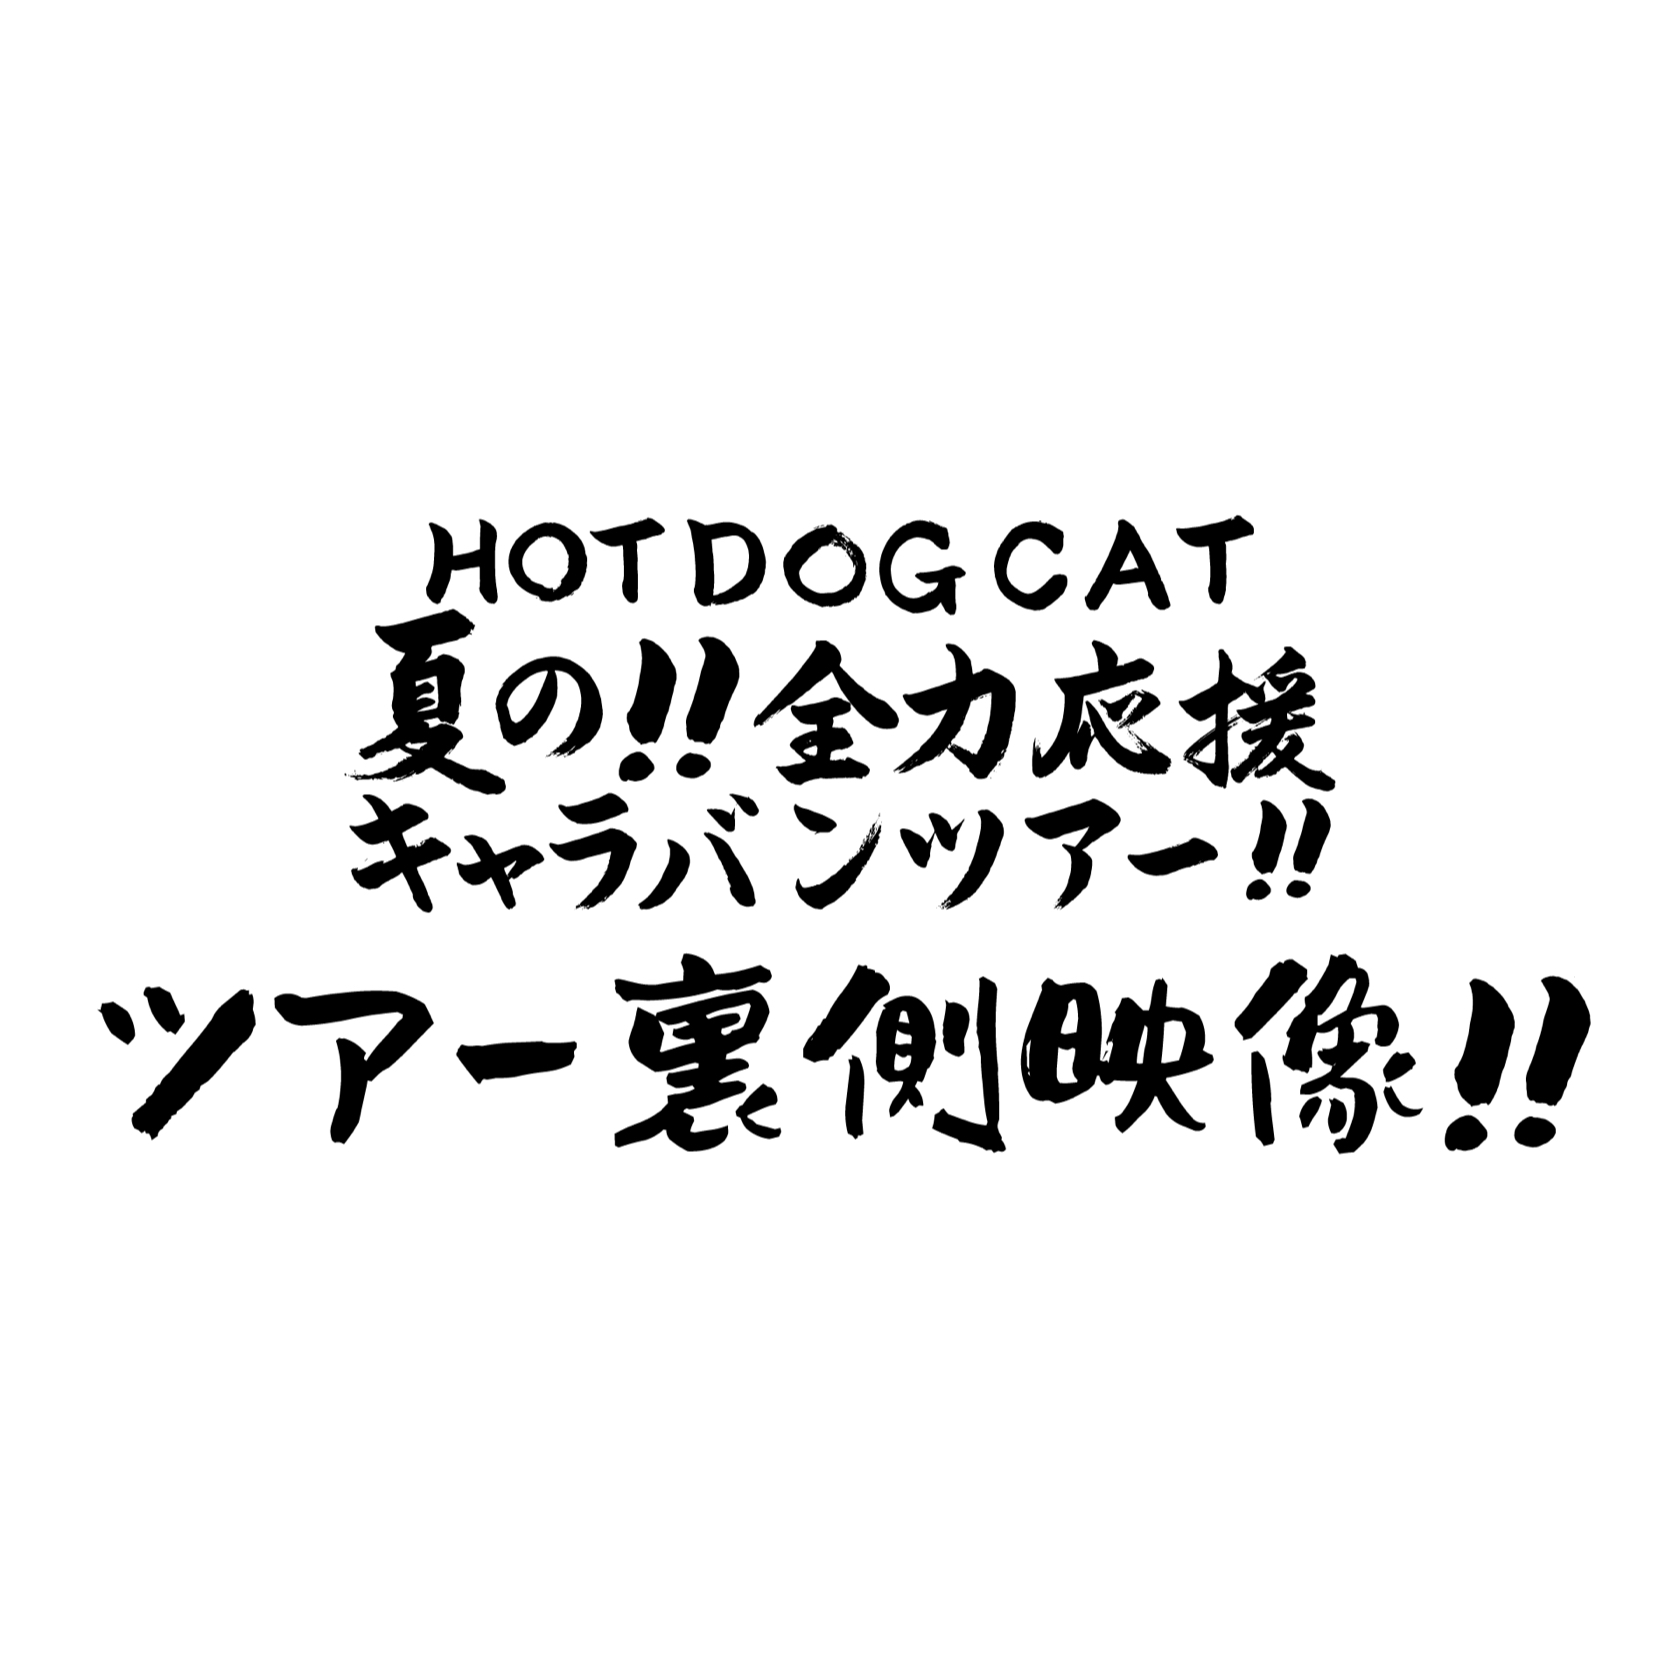 HOT DOG CAT ツアー裏側映像！！